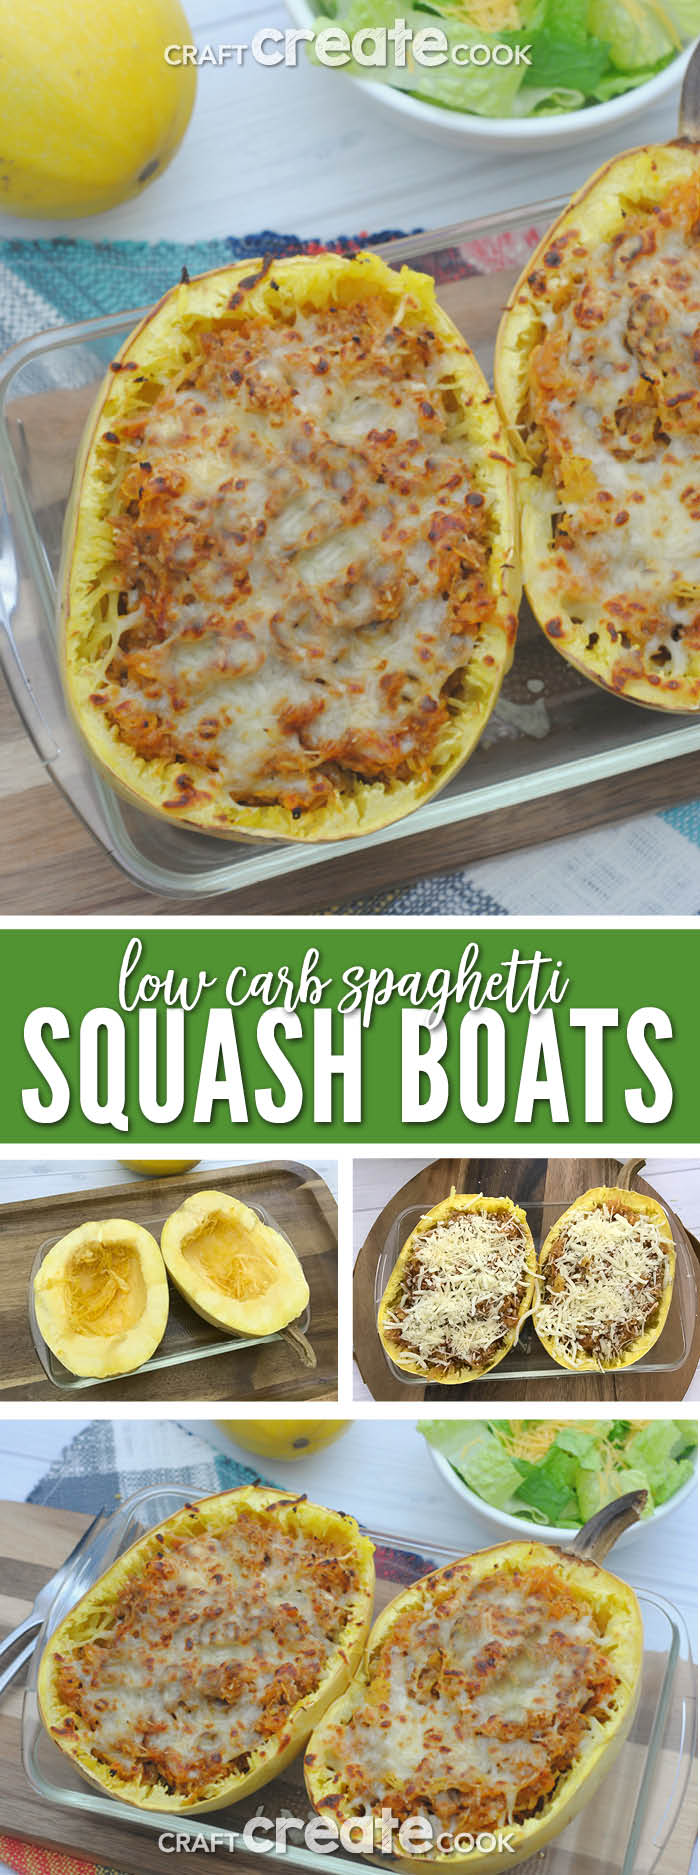 Low Carb Spaghetti Squash Boats - Craft Create Cook